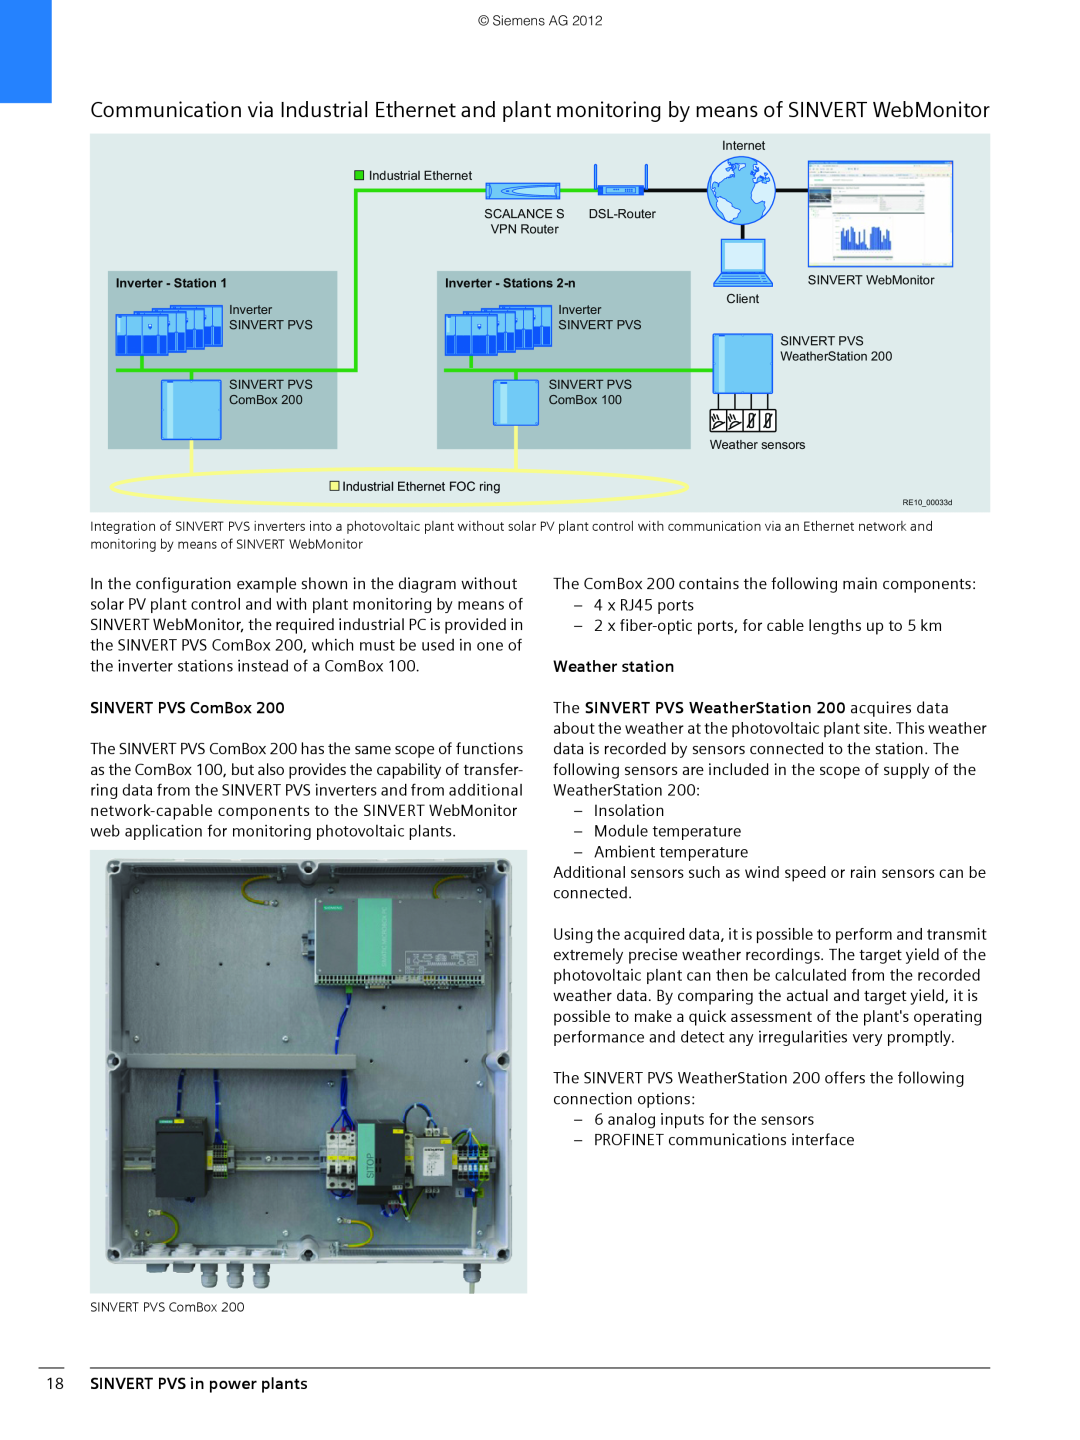 Siemens 600 brochure Weather station, 18SINVERT PVS in power plants, SINVERT PVS ComBox 